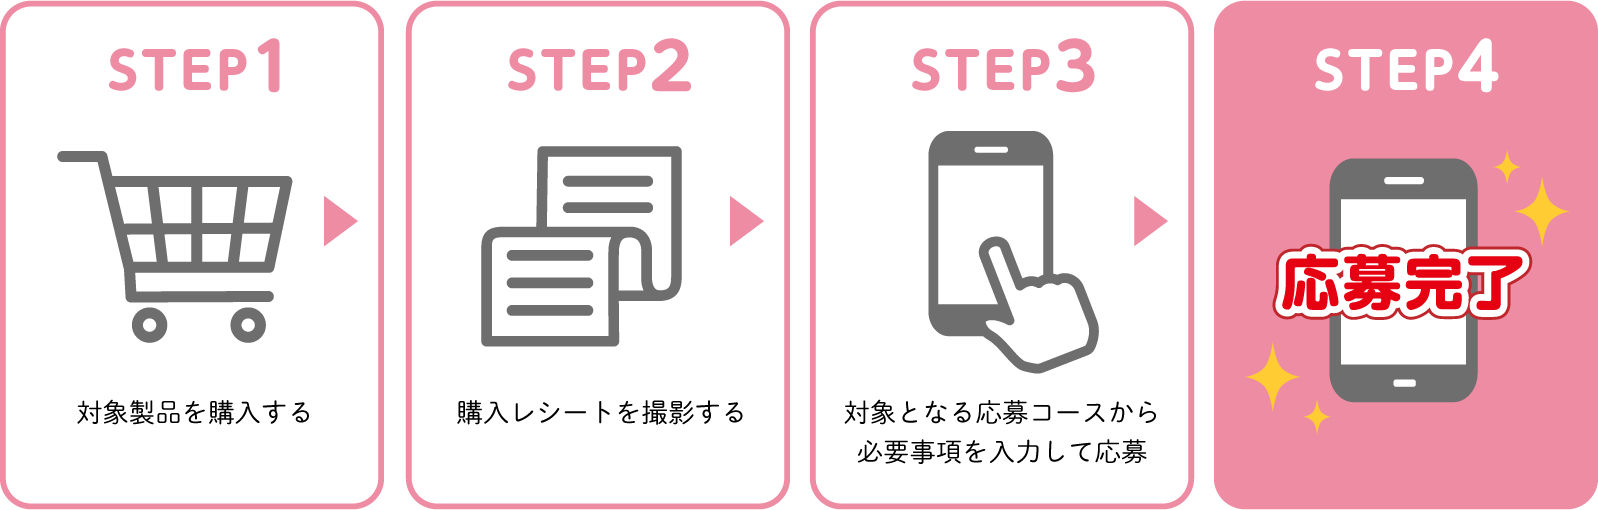 [STEP1]対象製品を購入する, [STEP2]購入レシートを撮影する, [STEP3]必要事項を入力して応募, [STEP4]応募完了